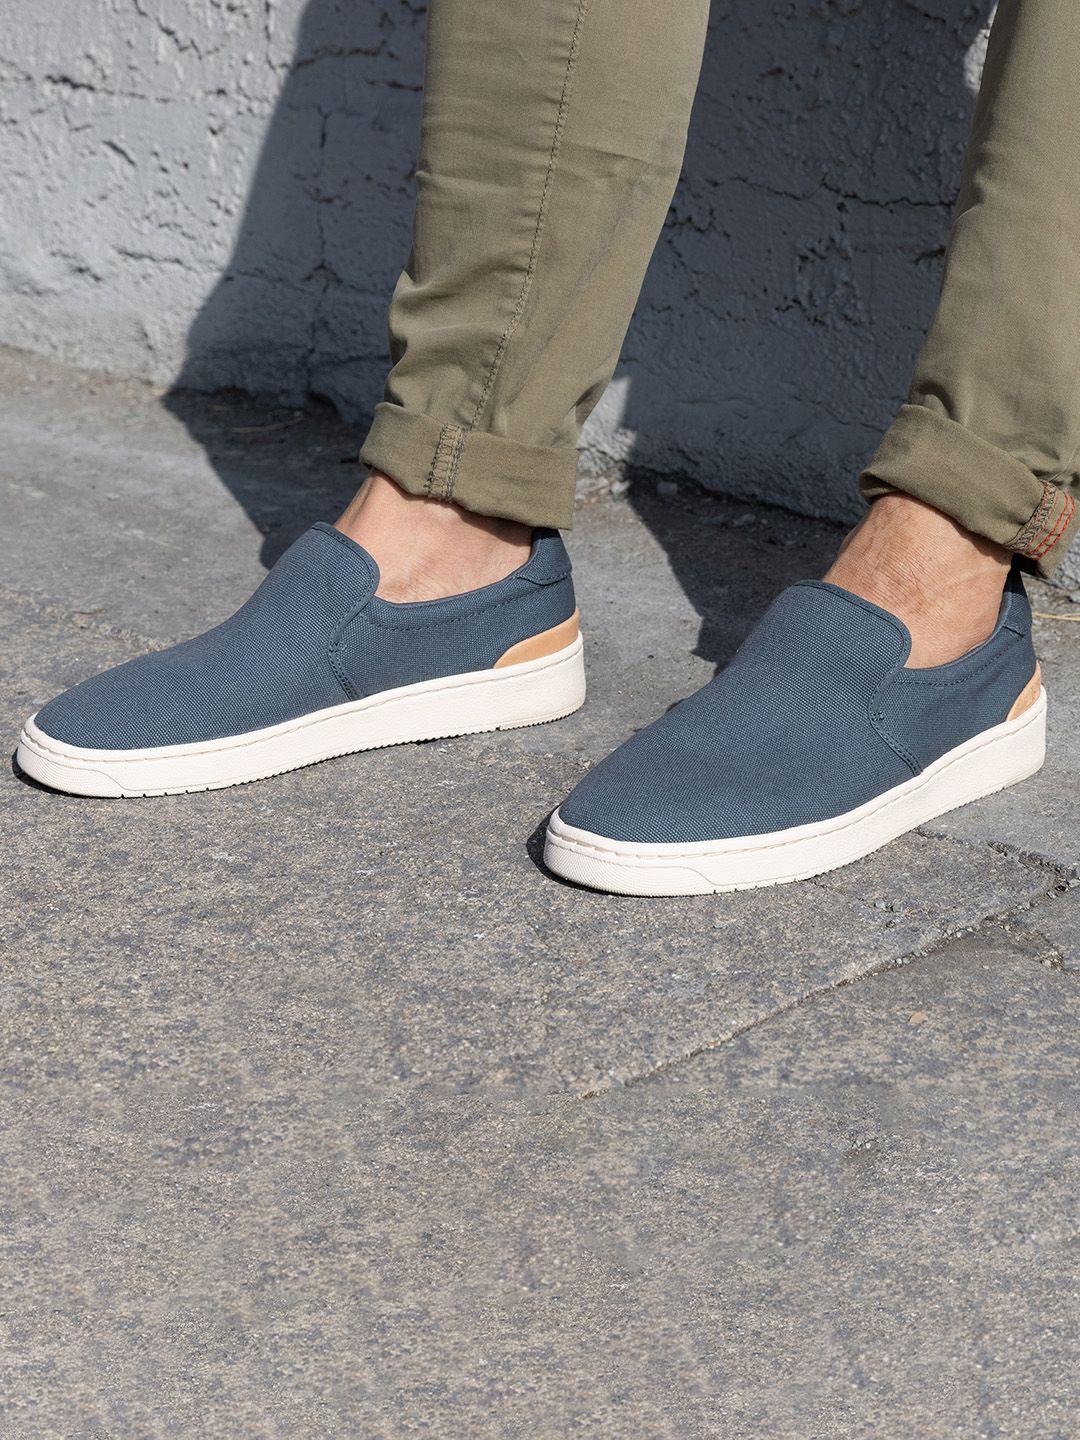 toms-men-blue-slip-on-sneakers